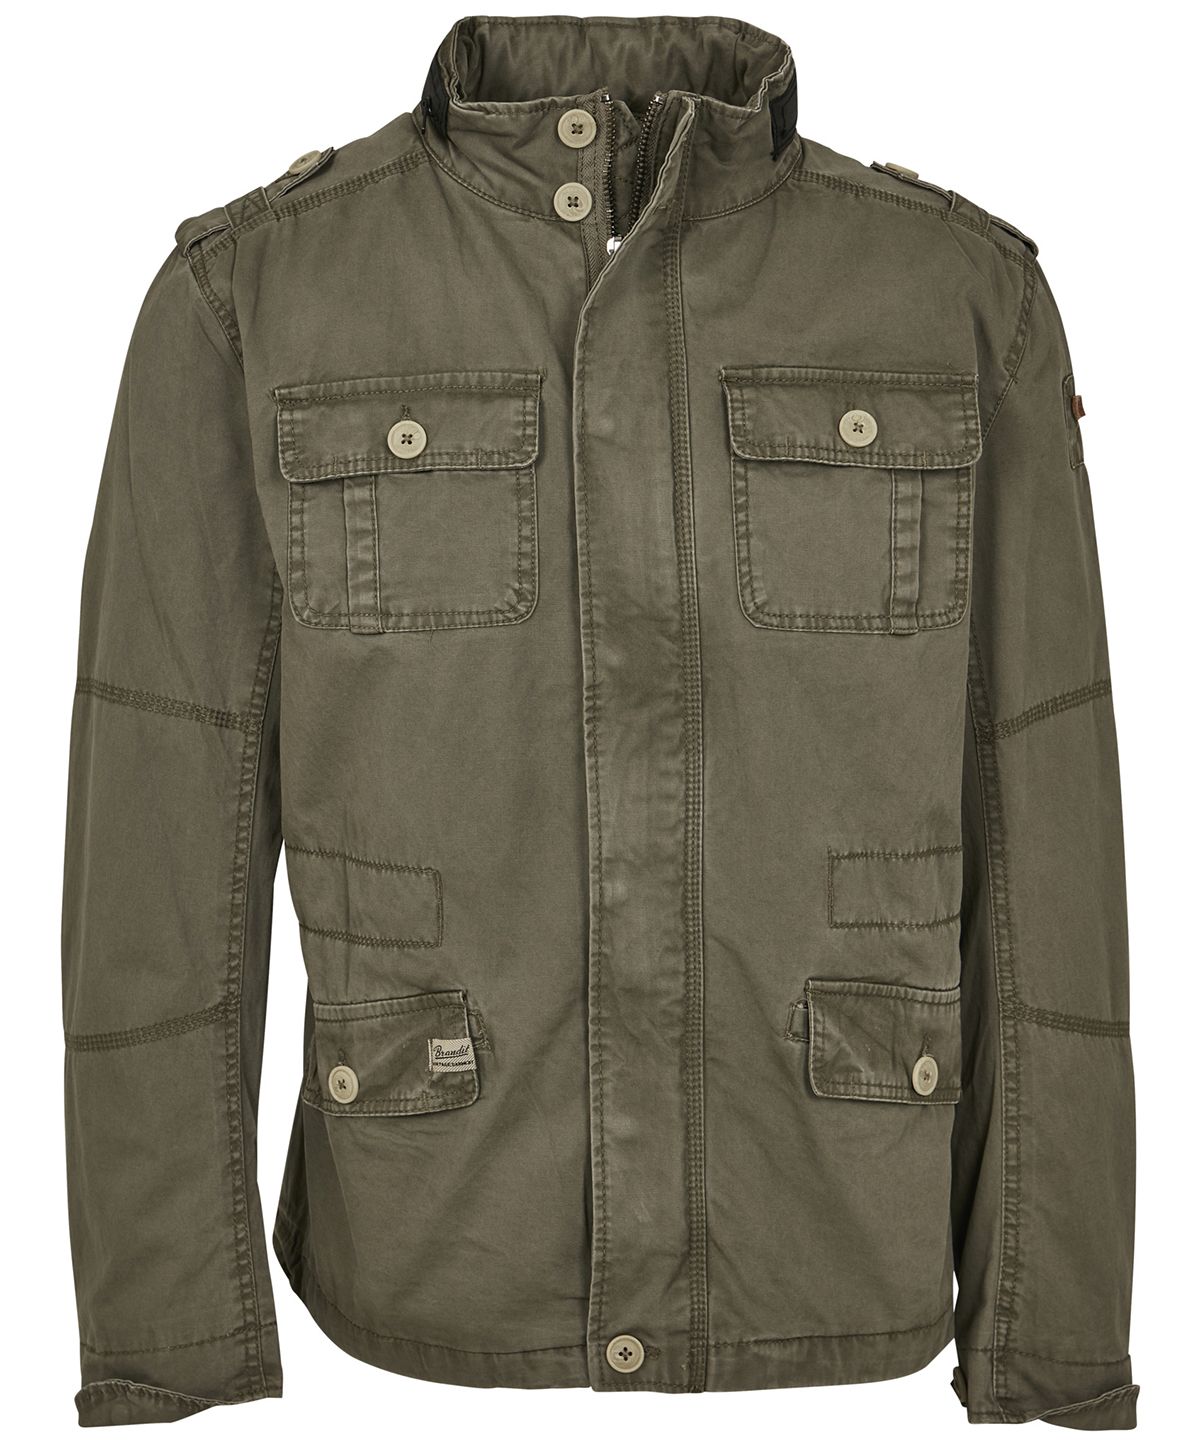 Britannia jacket – AVM Workwear and Embroidery Ltd